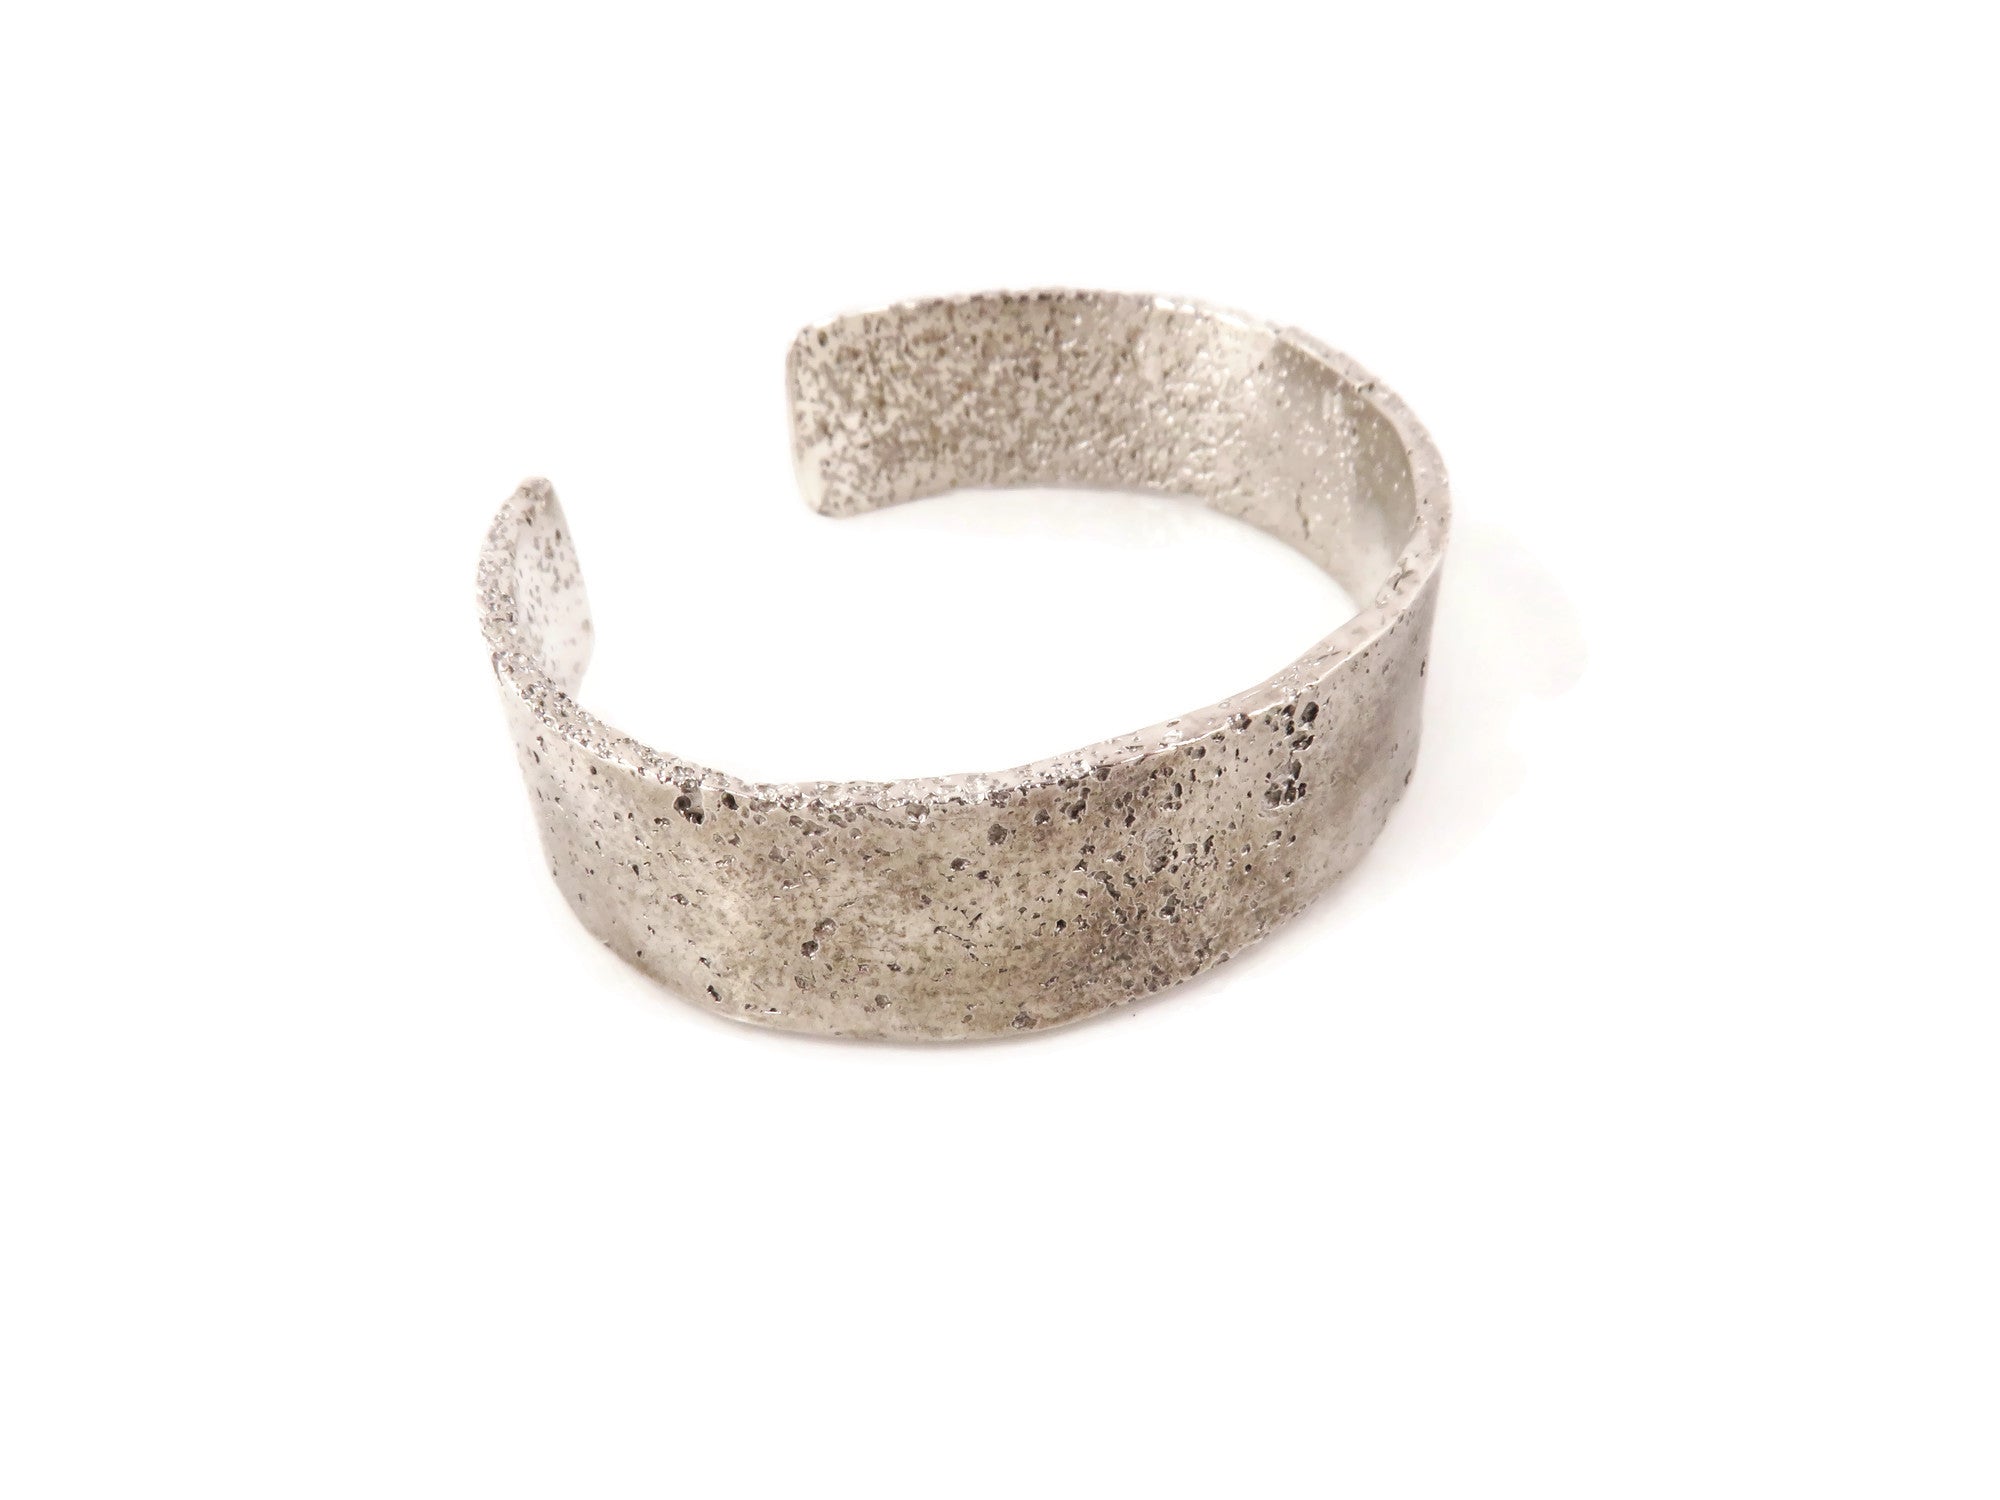 Rustic Textured Satin Silver Cuff Bracelet - KimyaJoyas